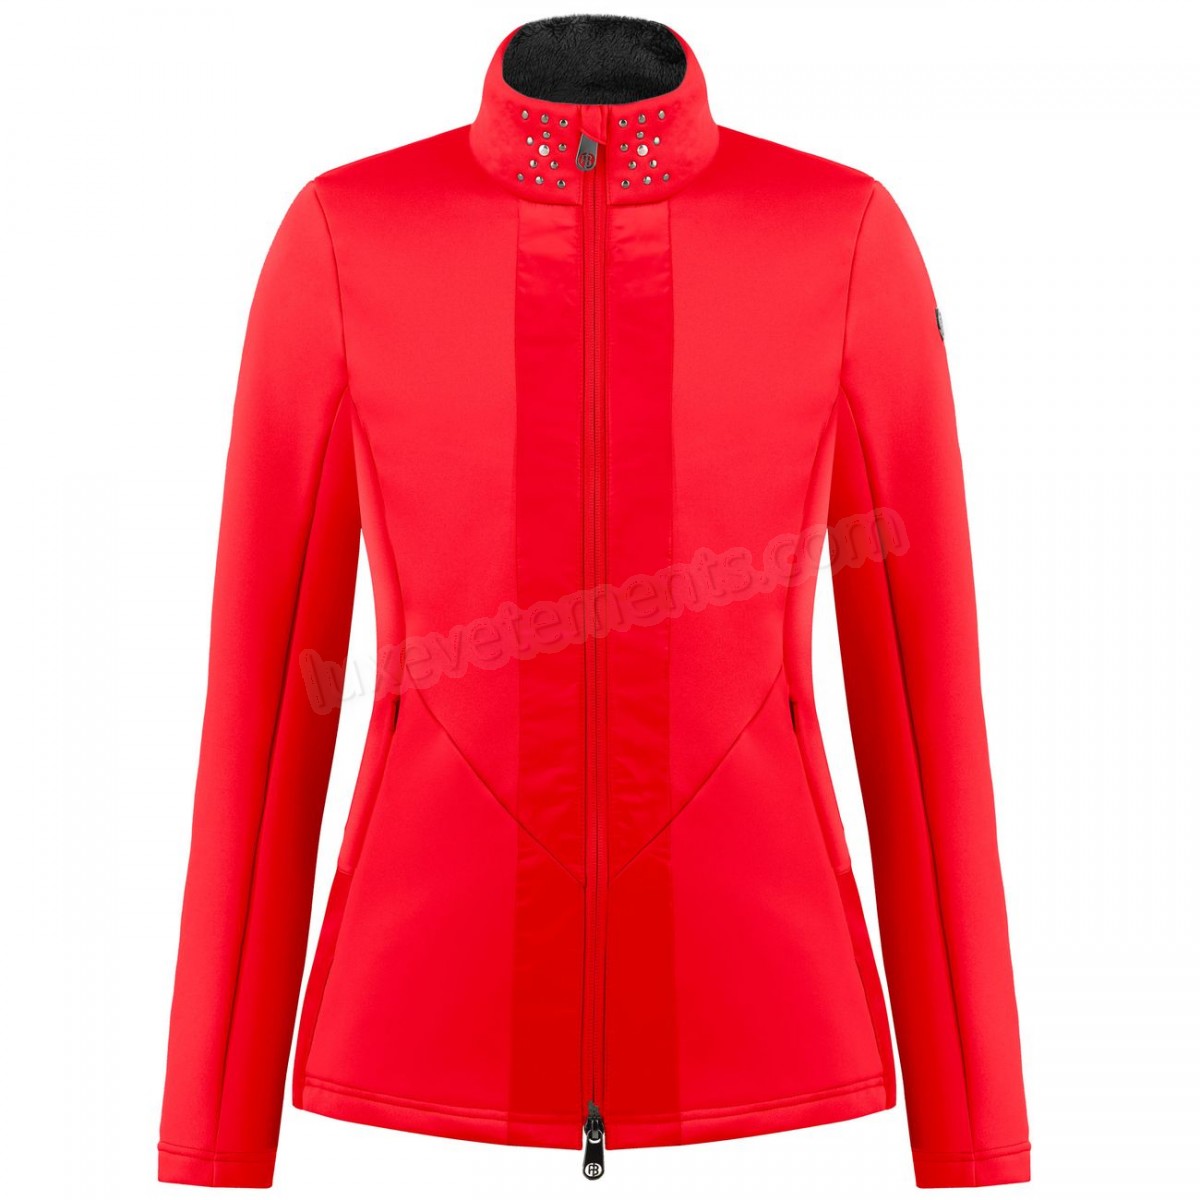 Poivre Blanc-Sports d'hiver femme POIVRE BLANC Veste En Polaire Poivre Blanc Hybrid Stretch Fleece Jacket 1702 Scarlet Red 5 Femme Vente en ligne - -3